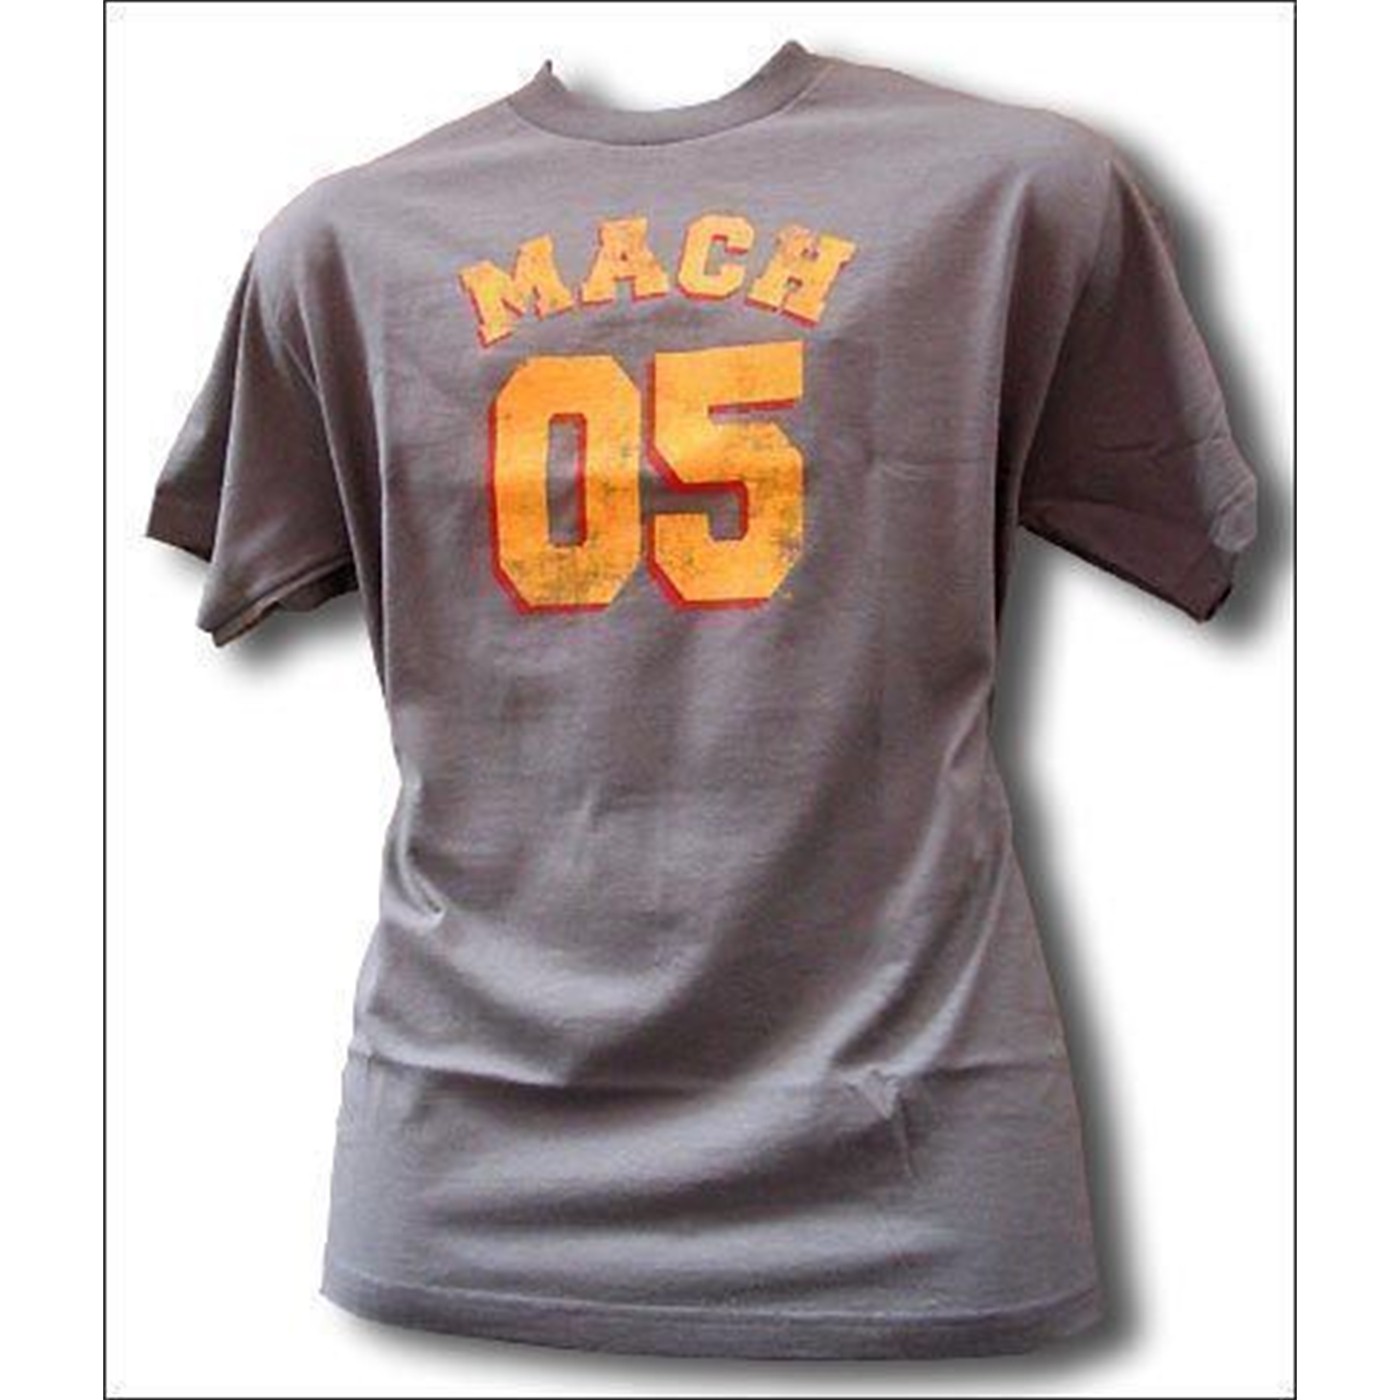 Mach 5 Distressed T-Shirt